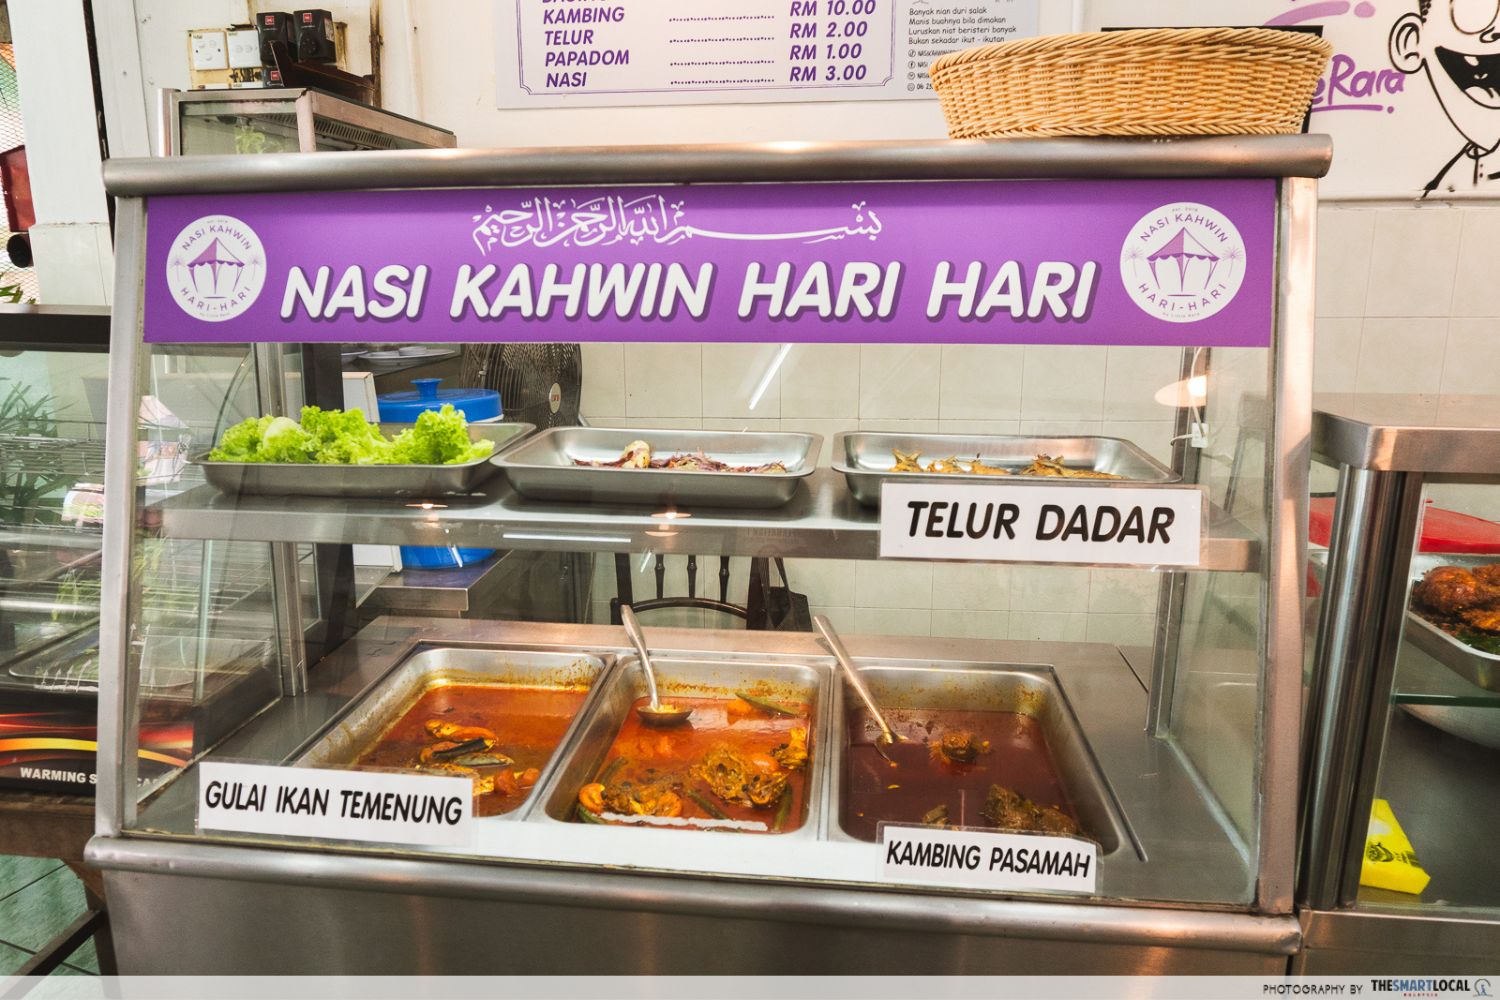 cheap eats at restaurants in kl - nasi kahwin hari-hari